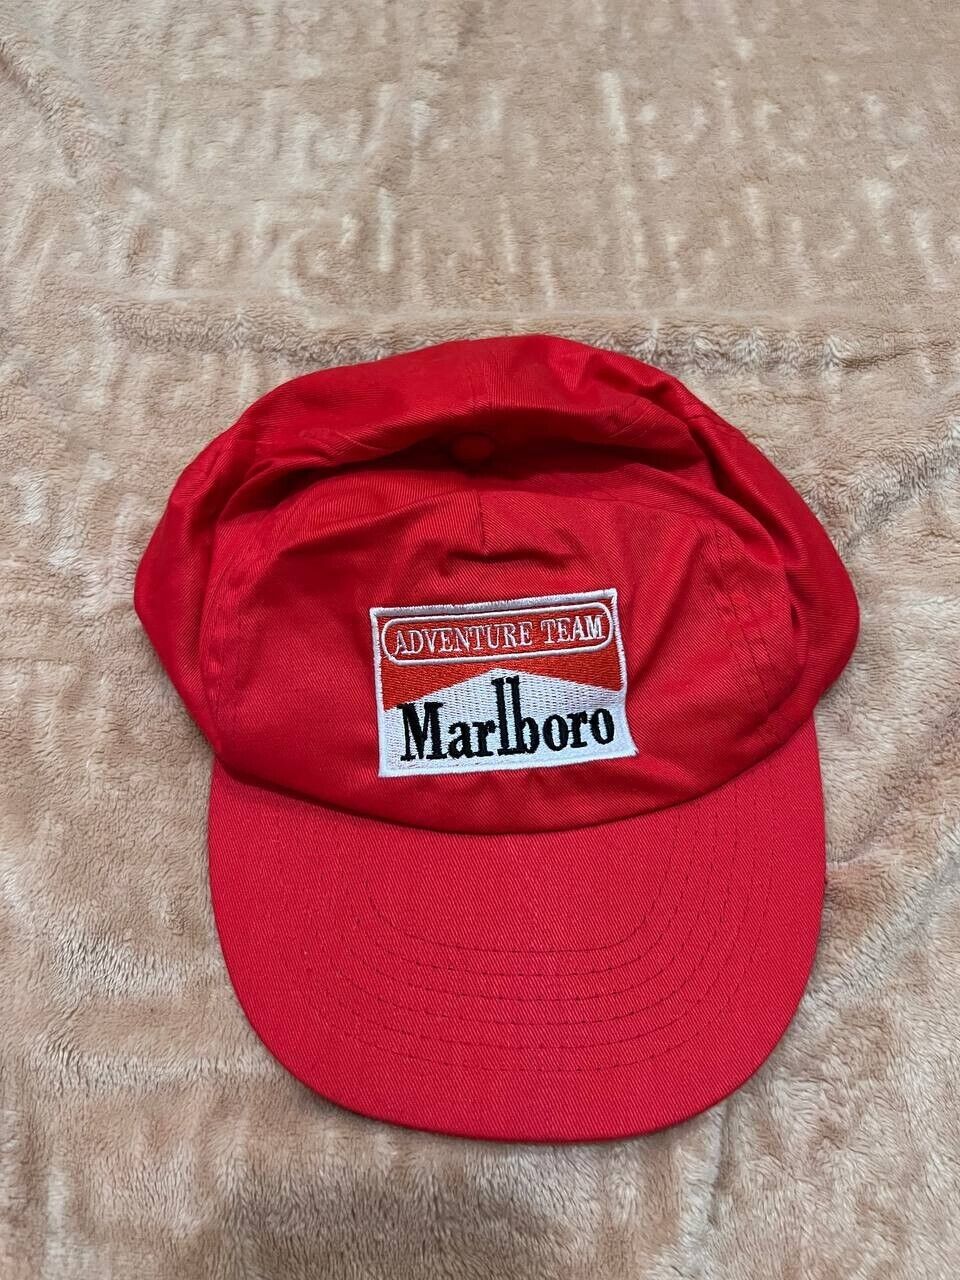 marlboro adventure team vintage cap